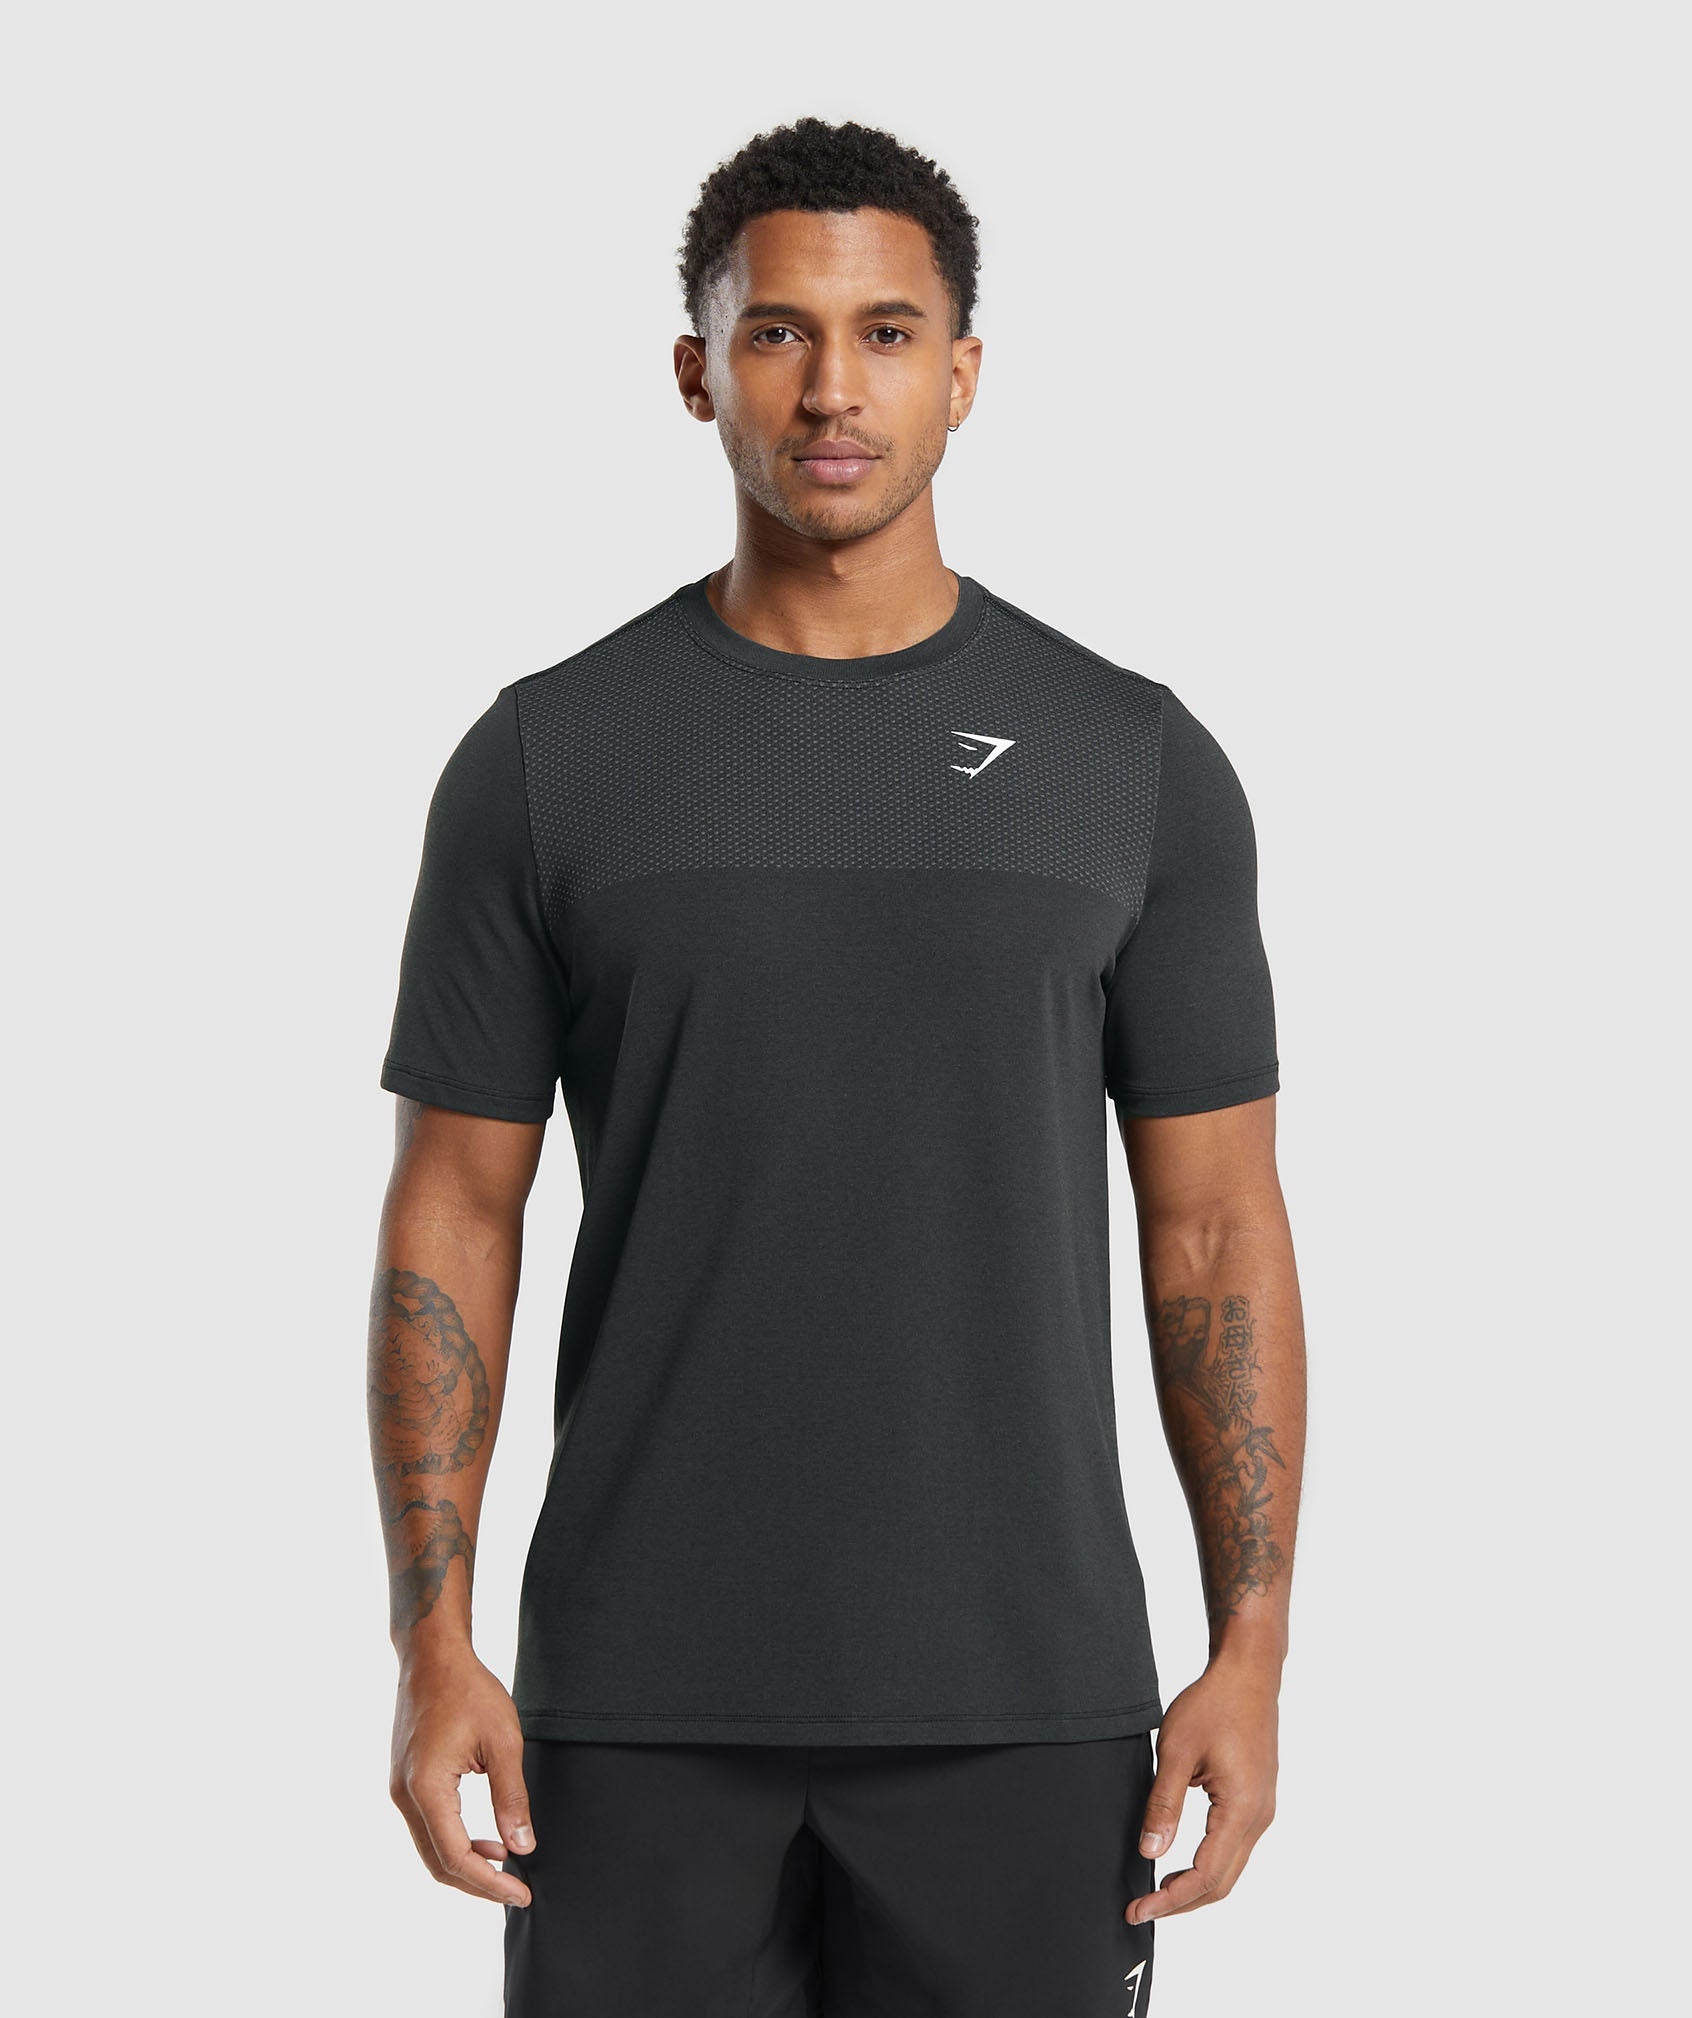 Gymshark Vital Seamless T-Shirt - Black/Medium Grey Marl